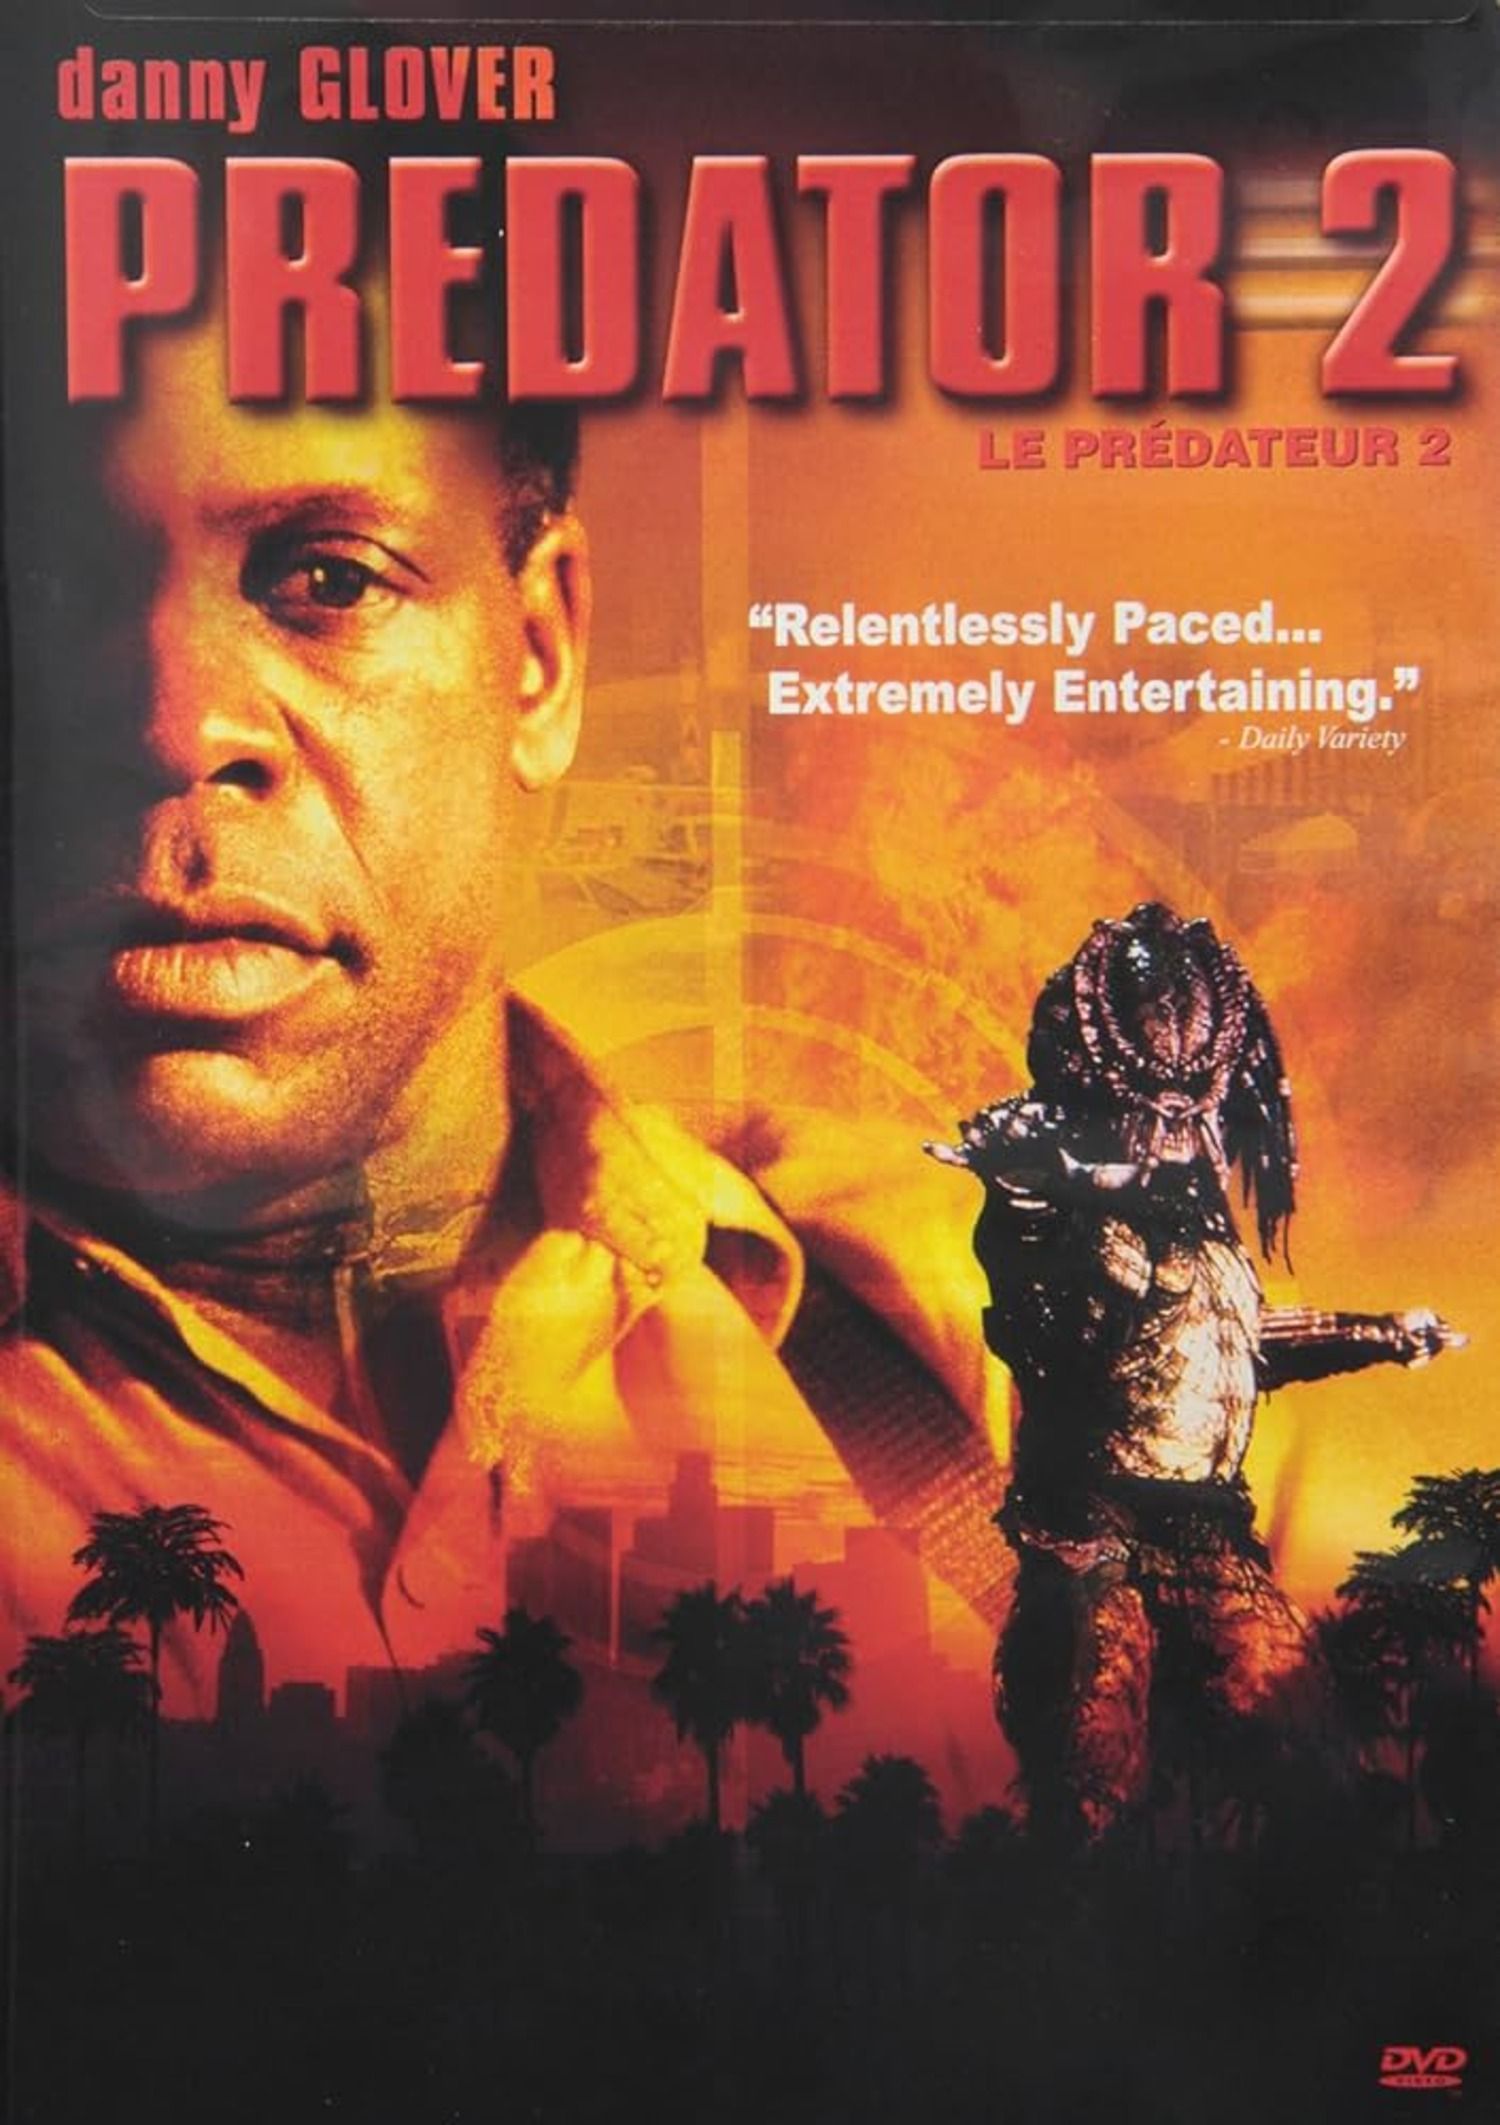 Poster for Predator 2, starring Danny Glover as Detective Mike Harrigan